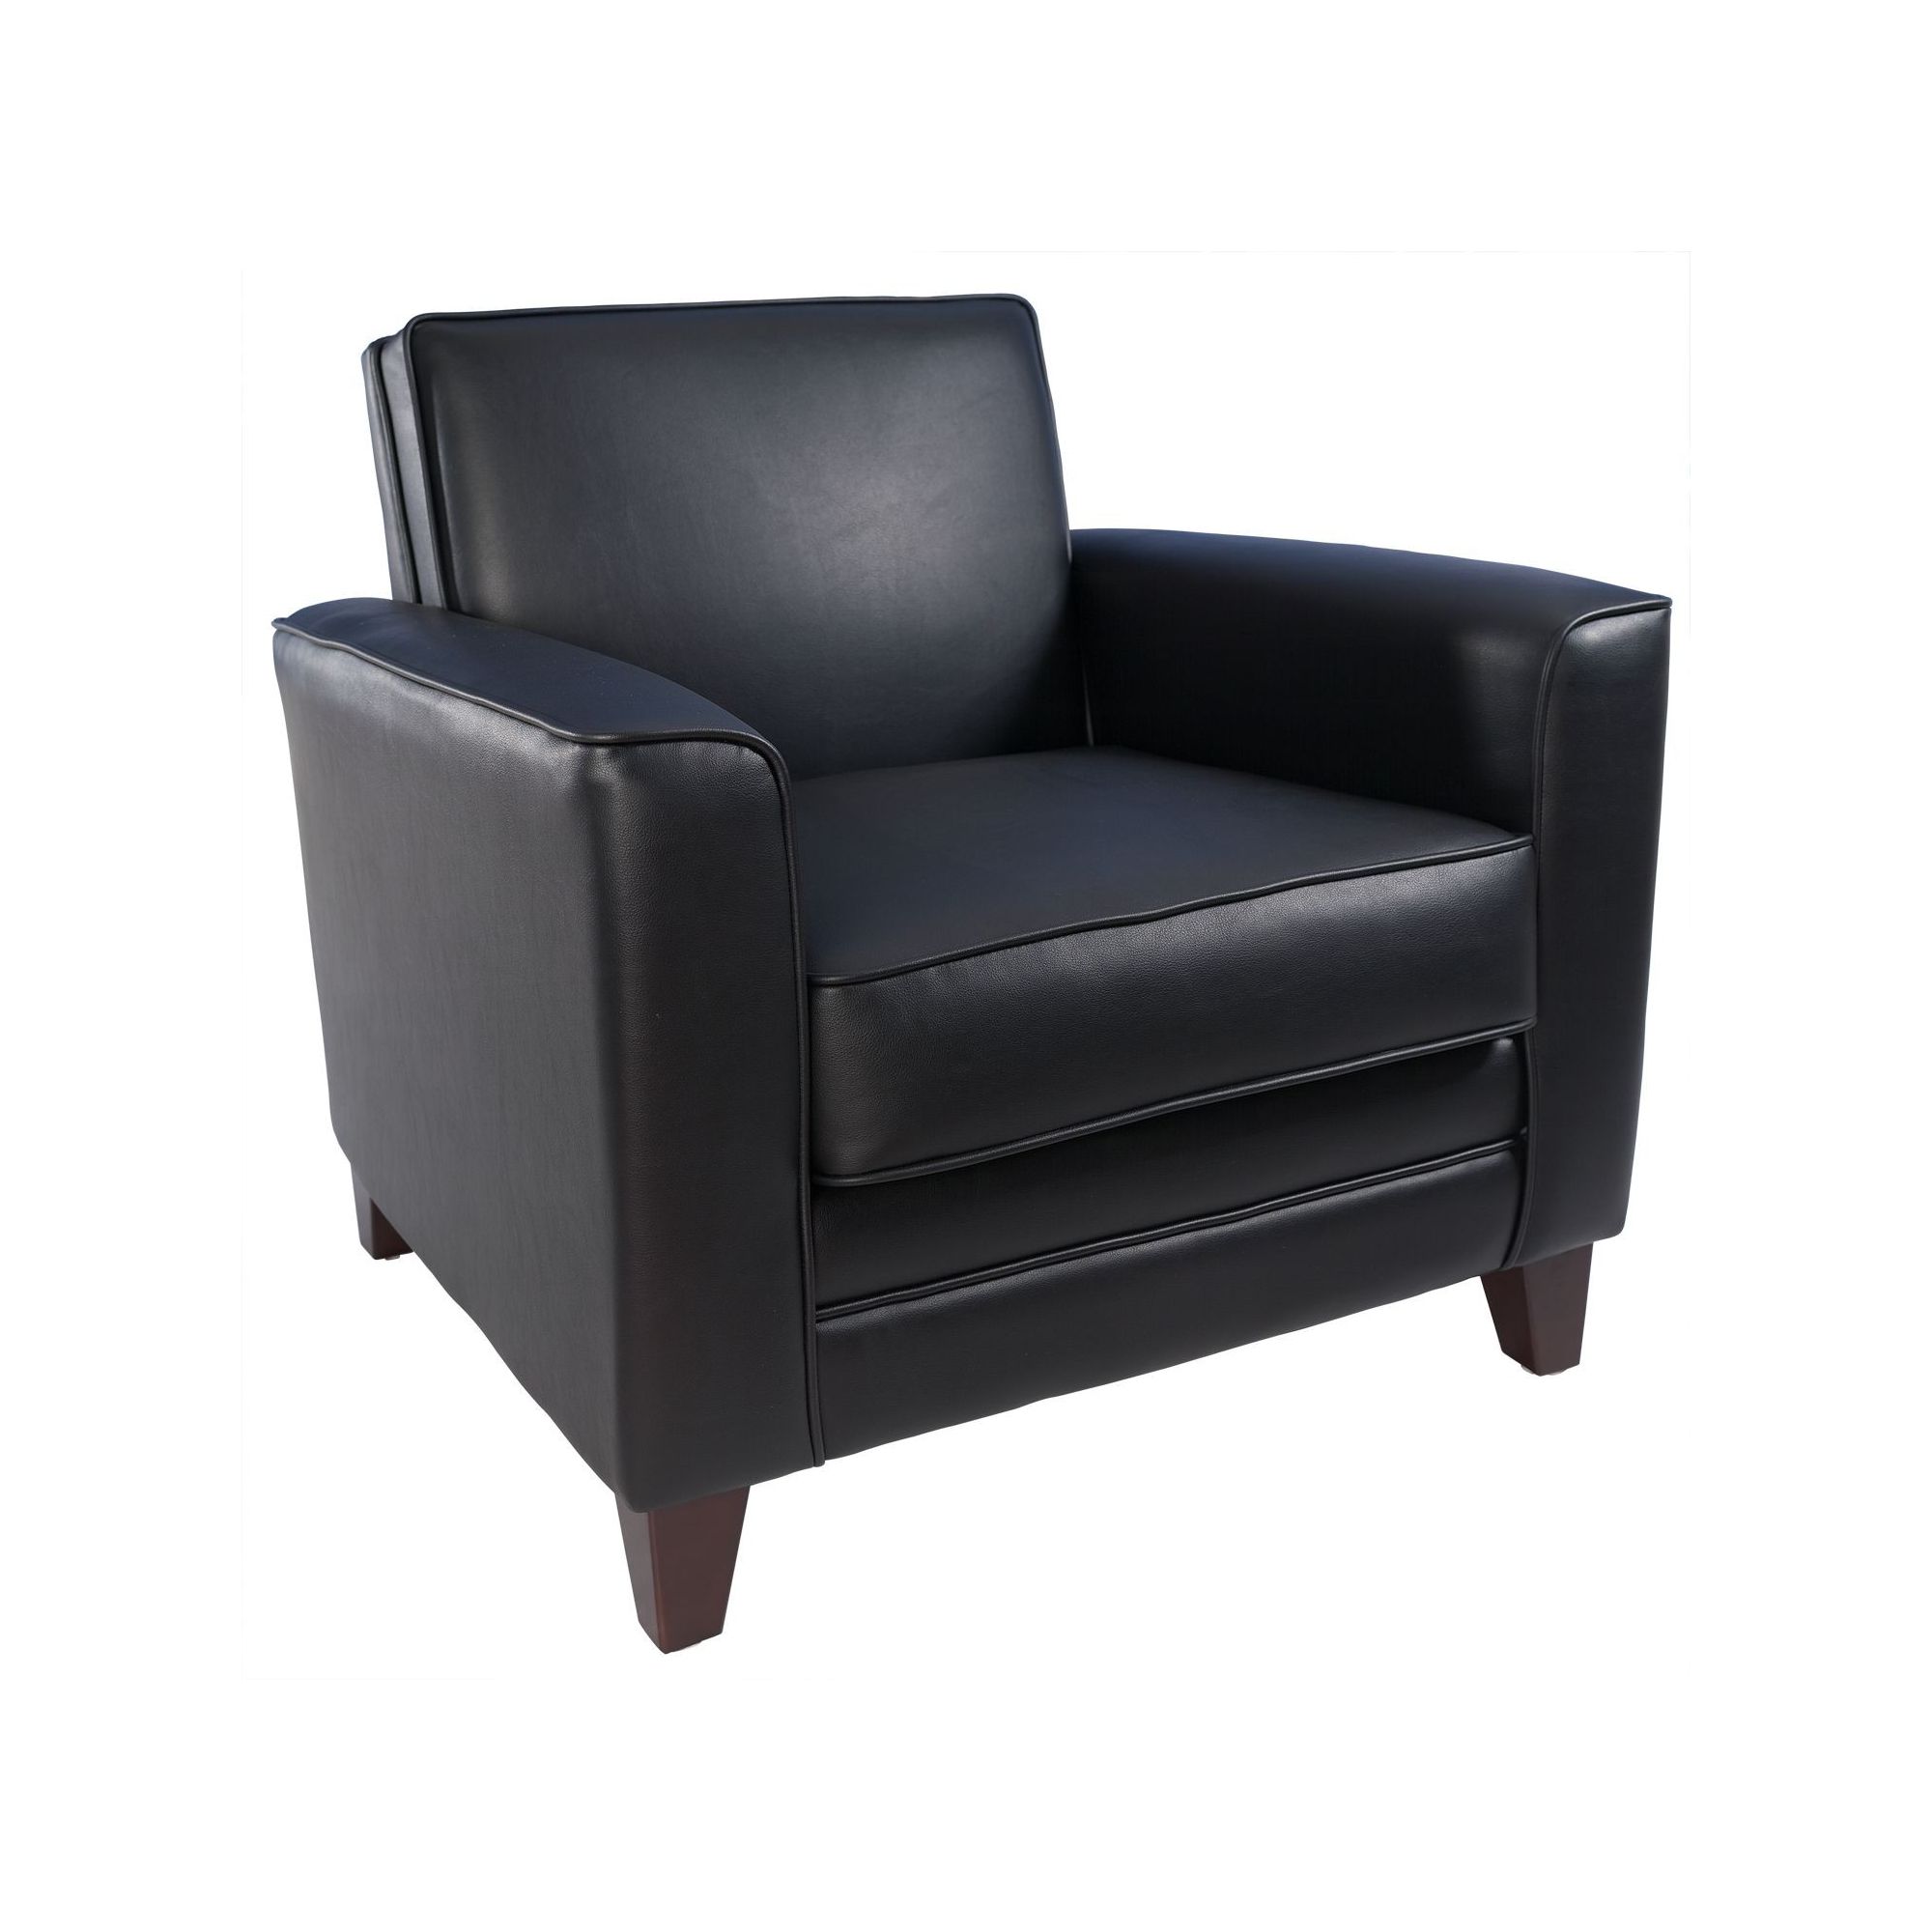 Teknik Office Newport Single Seat Armchair at Tescos Direct